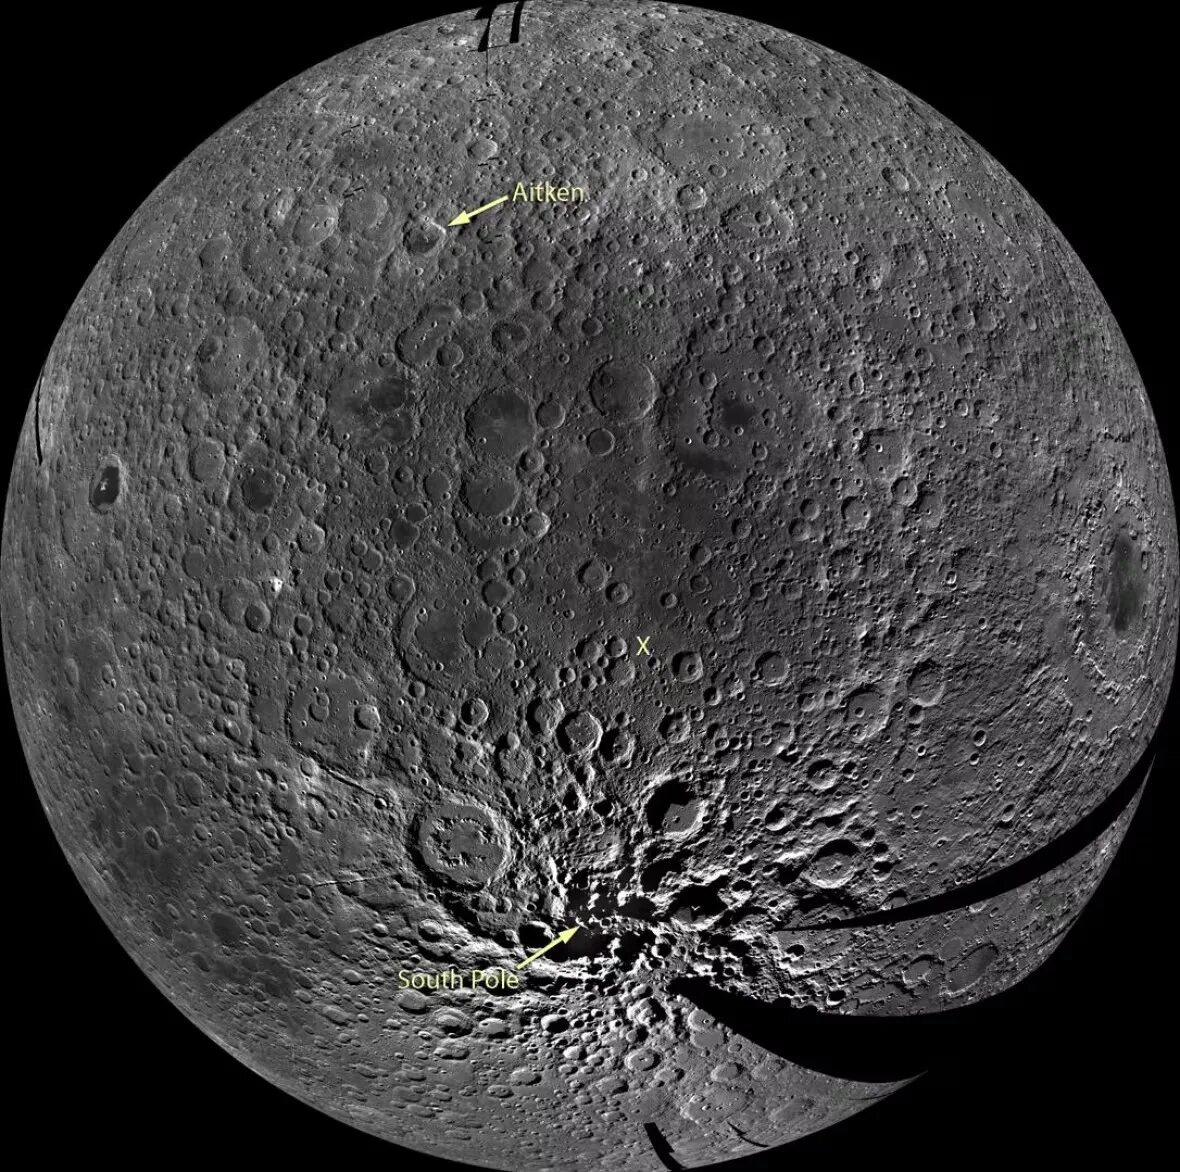 Slide expressão lunar. Кратер Эйткен. Эйткен кратер на Луне. Южный полюс Эйткен. Бассейн Южный полюс Эйткен на Луне.